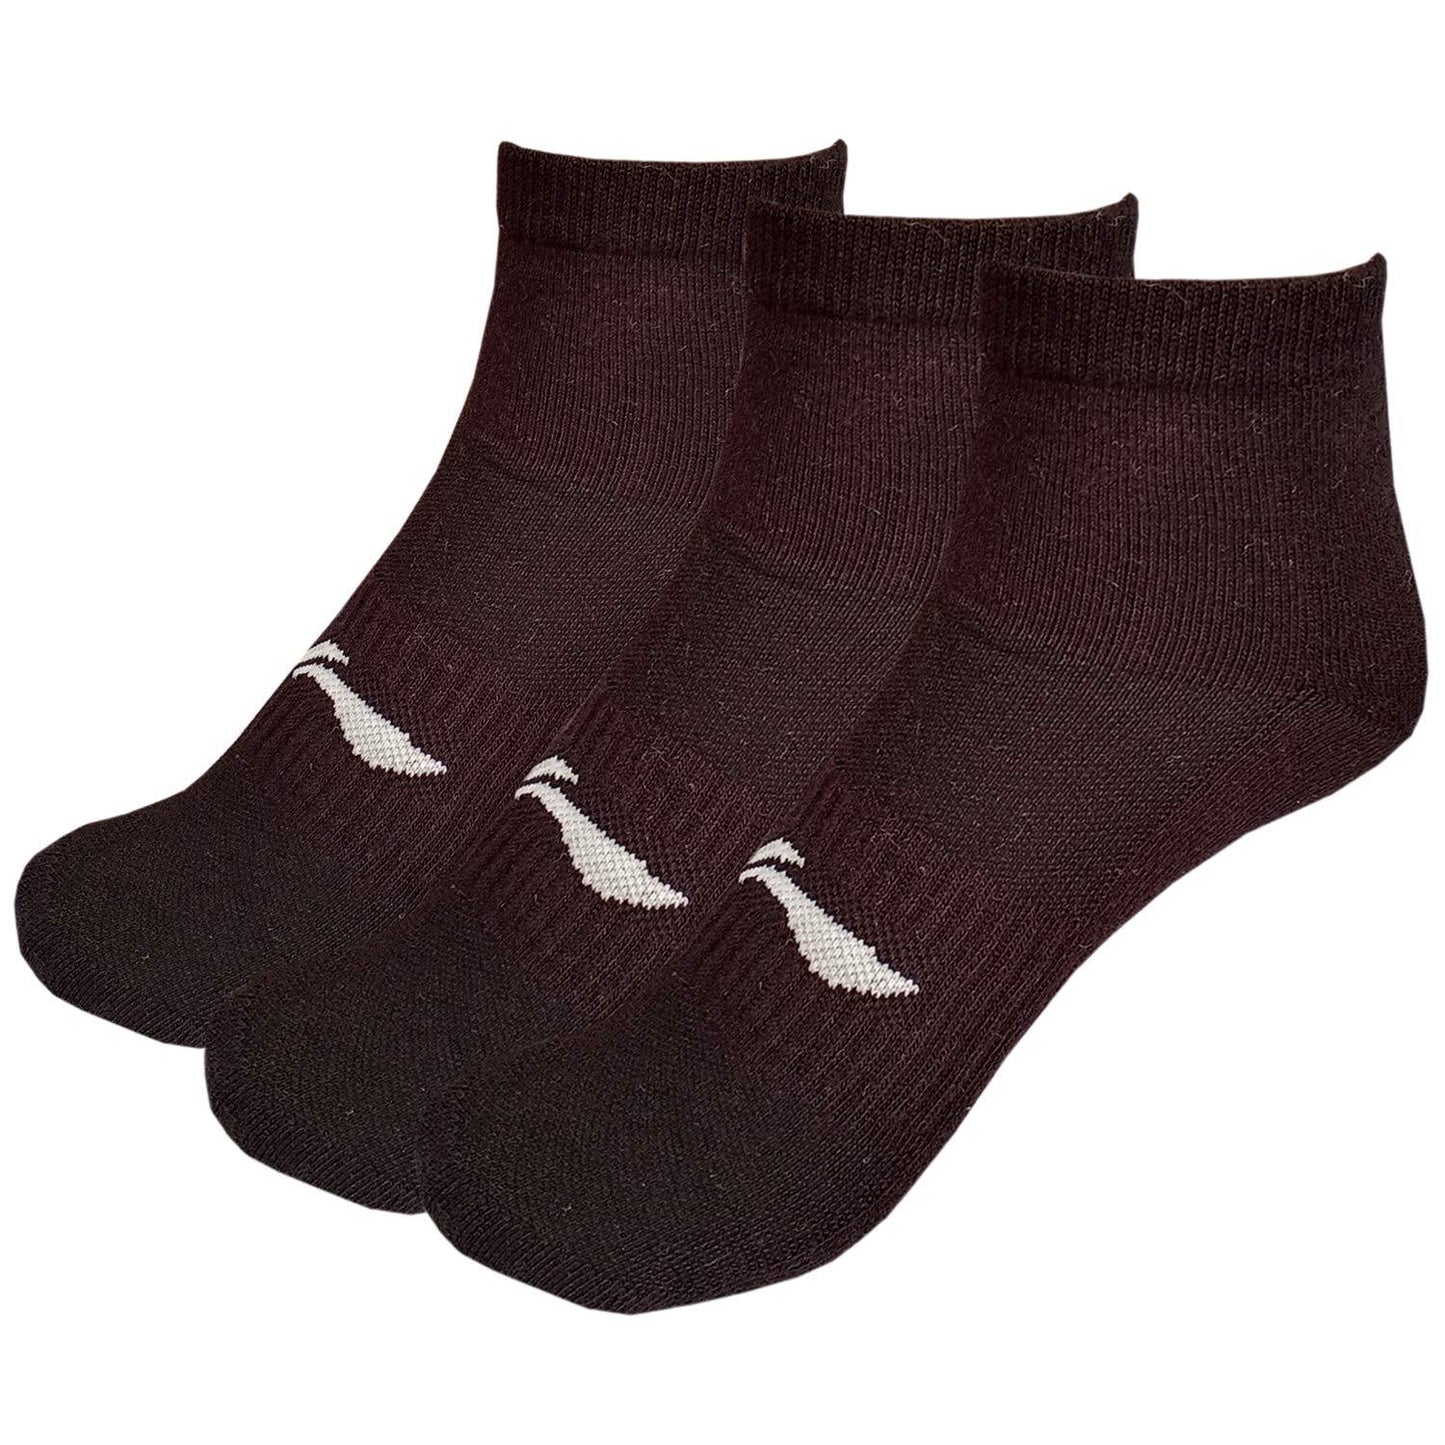 Li-Ning Cotton Men's Sports Socks, No-Show, Pack of 3, Black - Best Price online Prokicksports.com